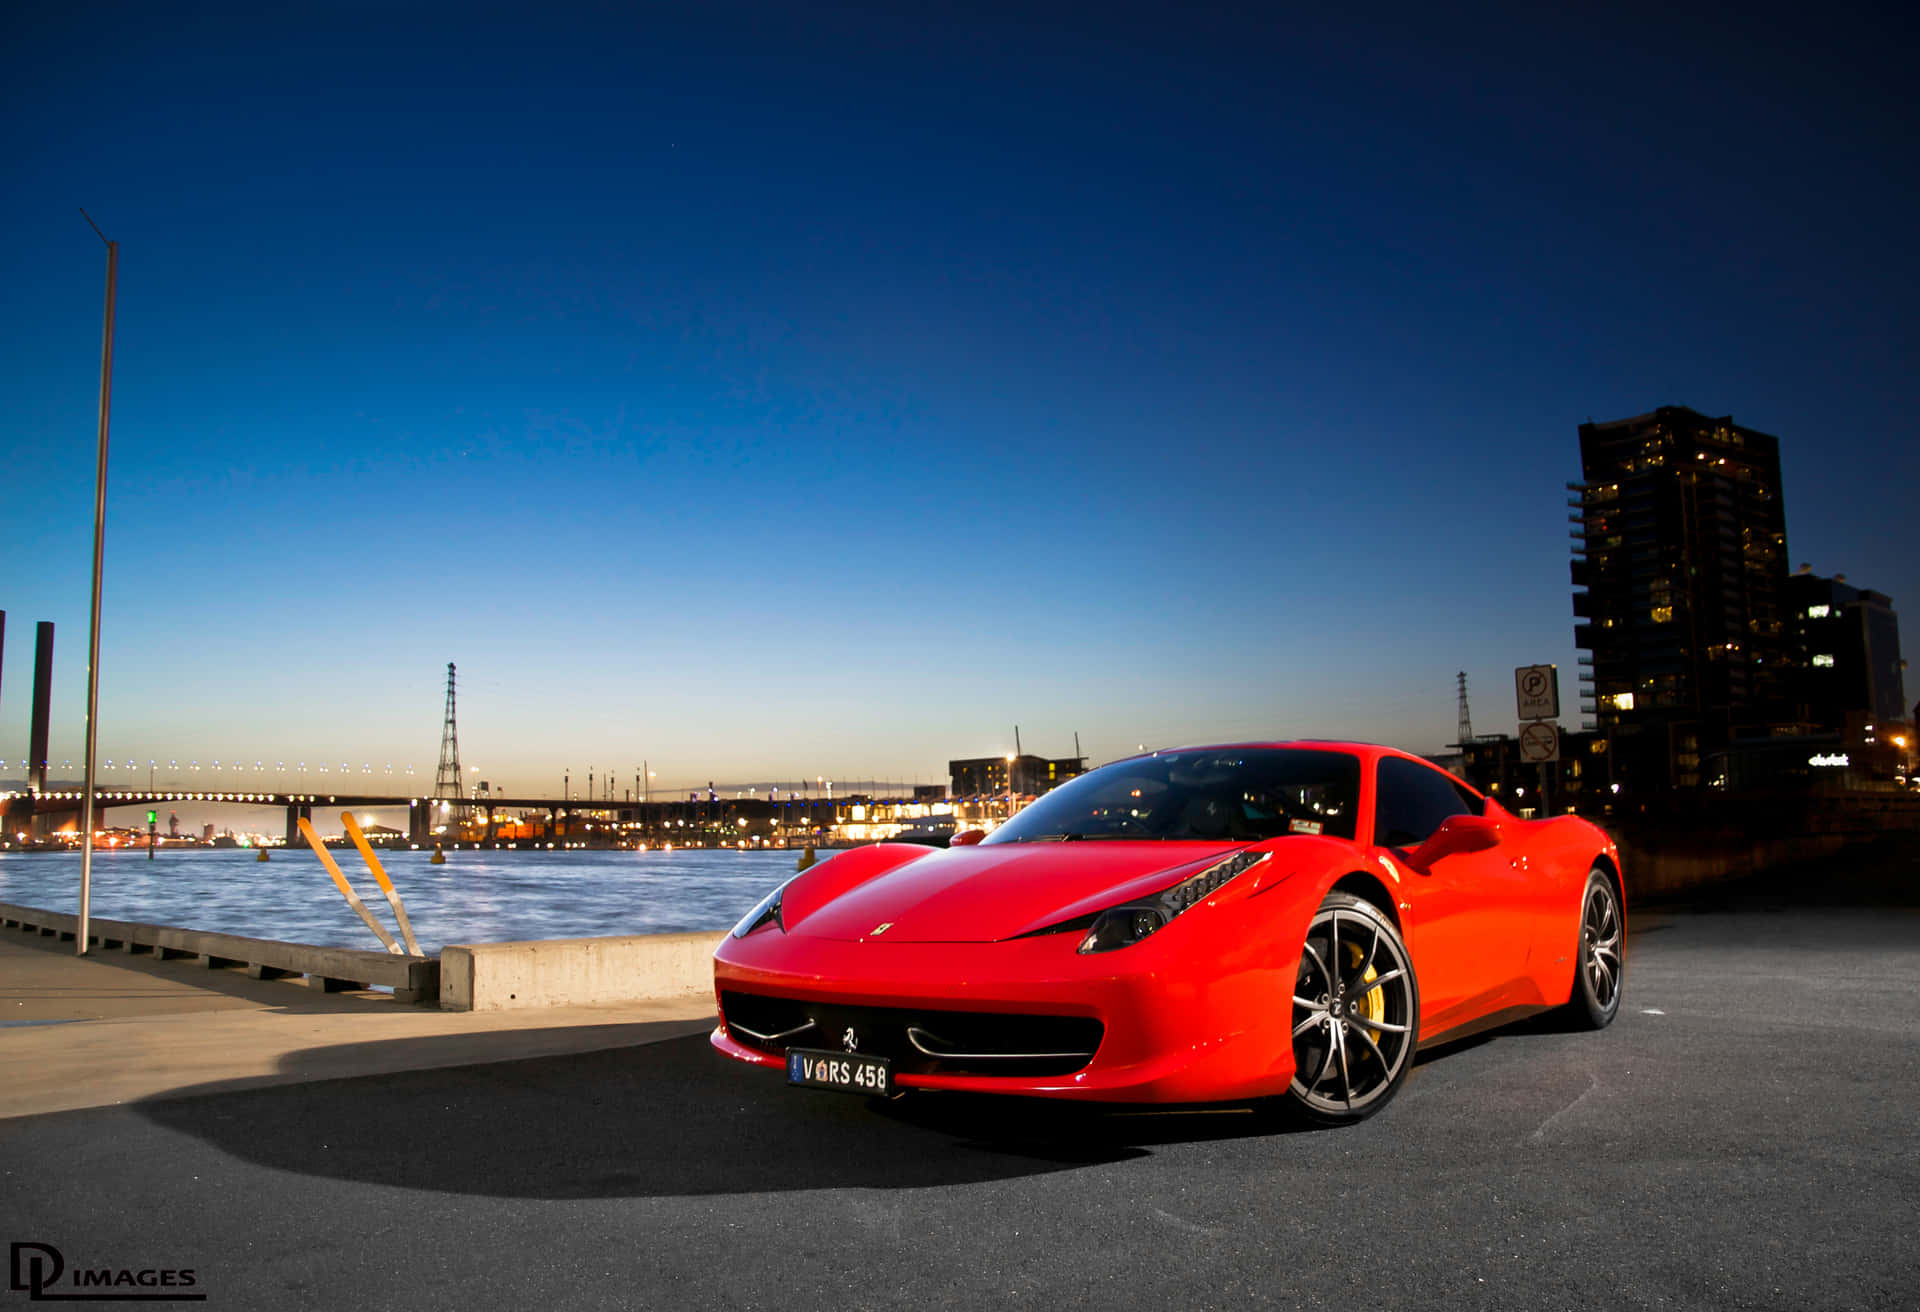 Enjoy the Cool Exhilaration of the Ferrari Wallpaper